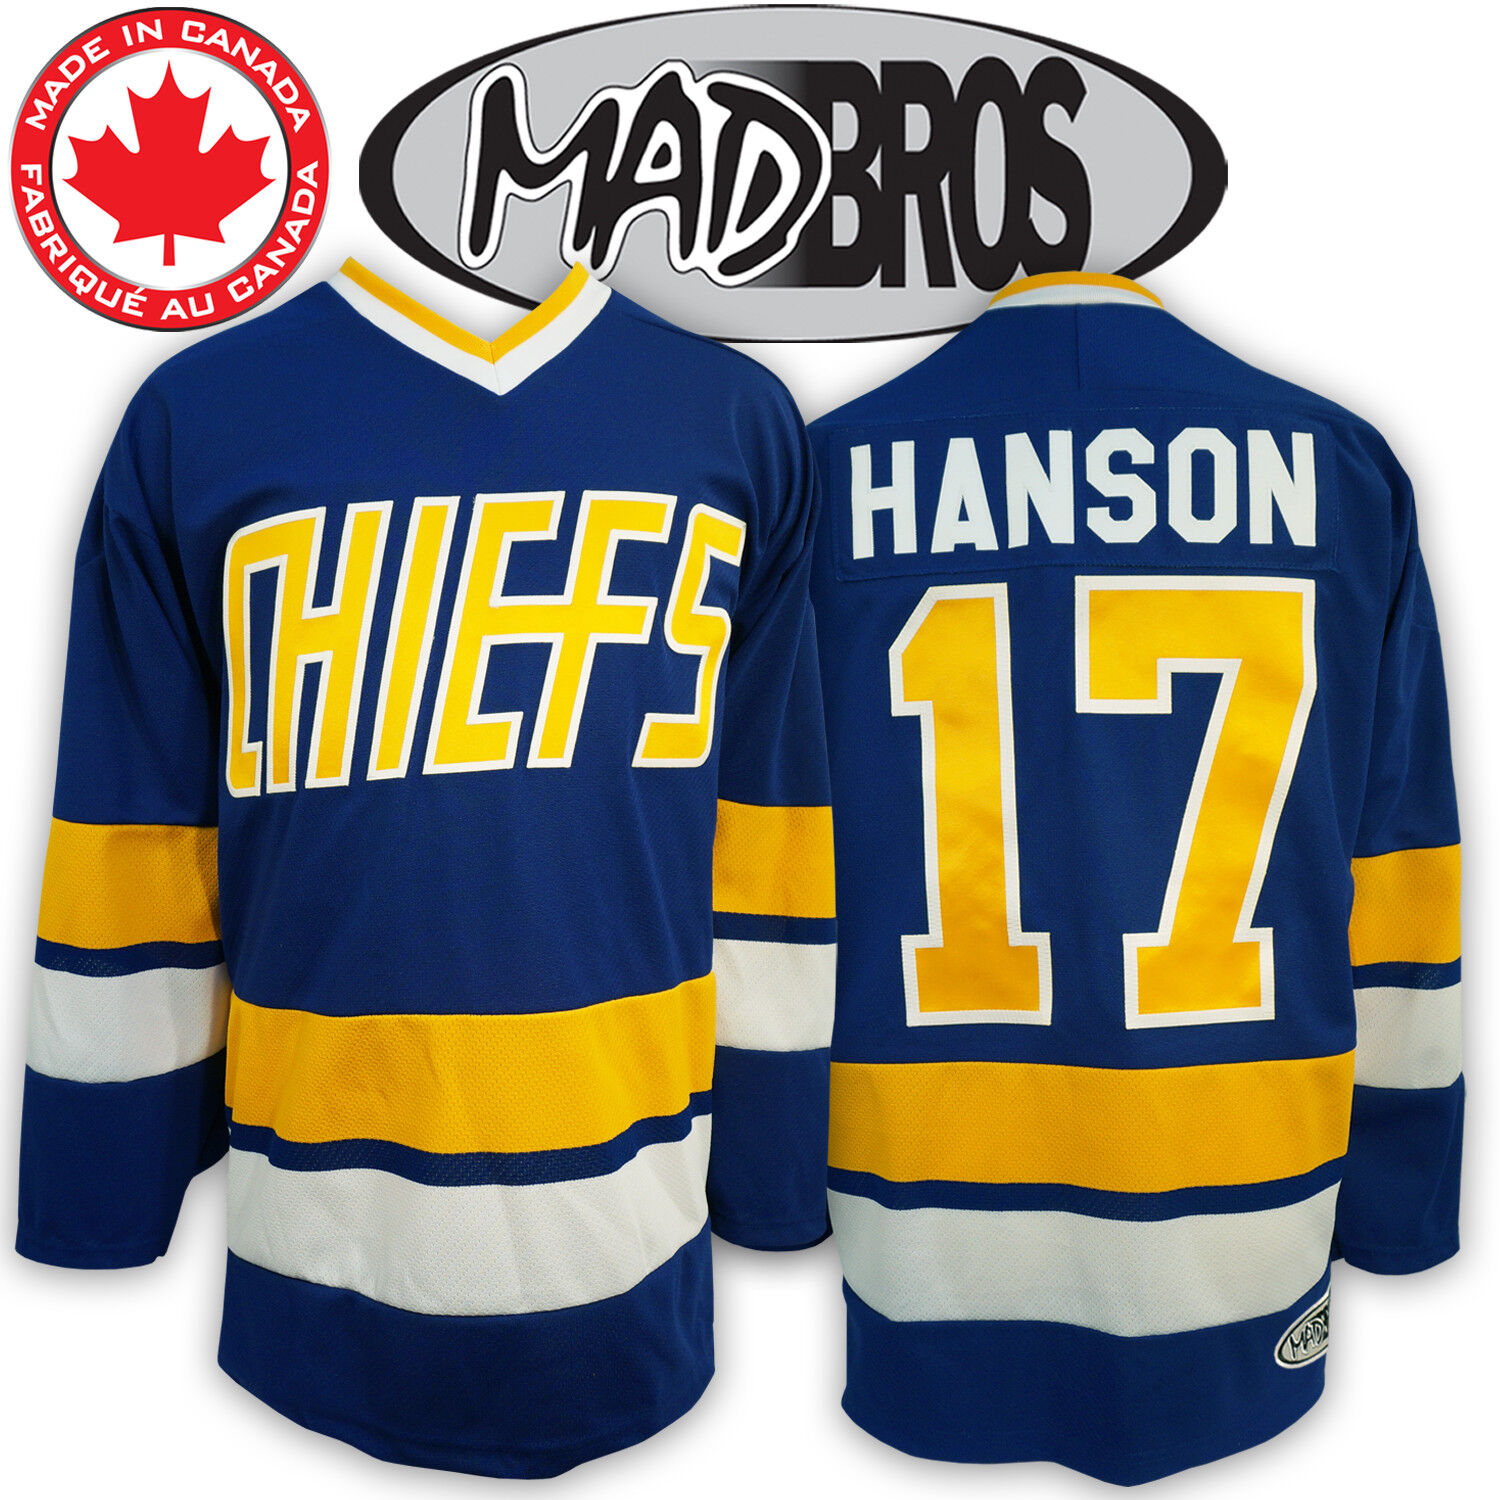 Hanson Brothers CHIEFS Hockey Jersey *SlapShot Movie Licensed* *Made in Canada*